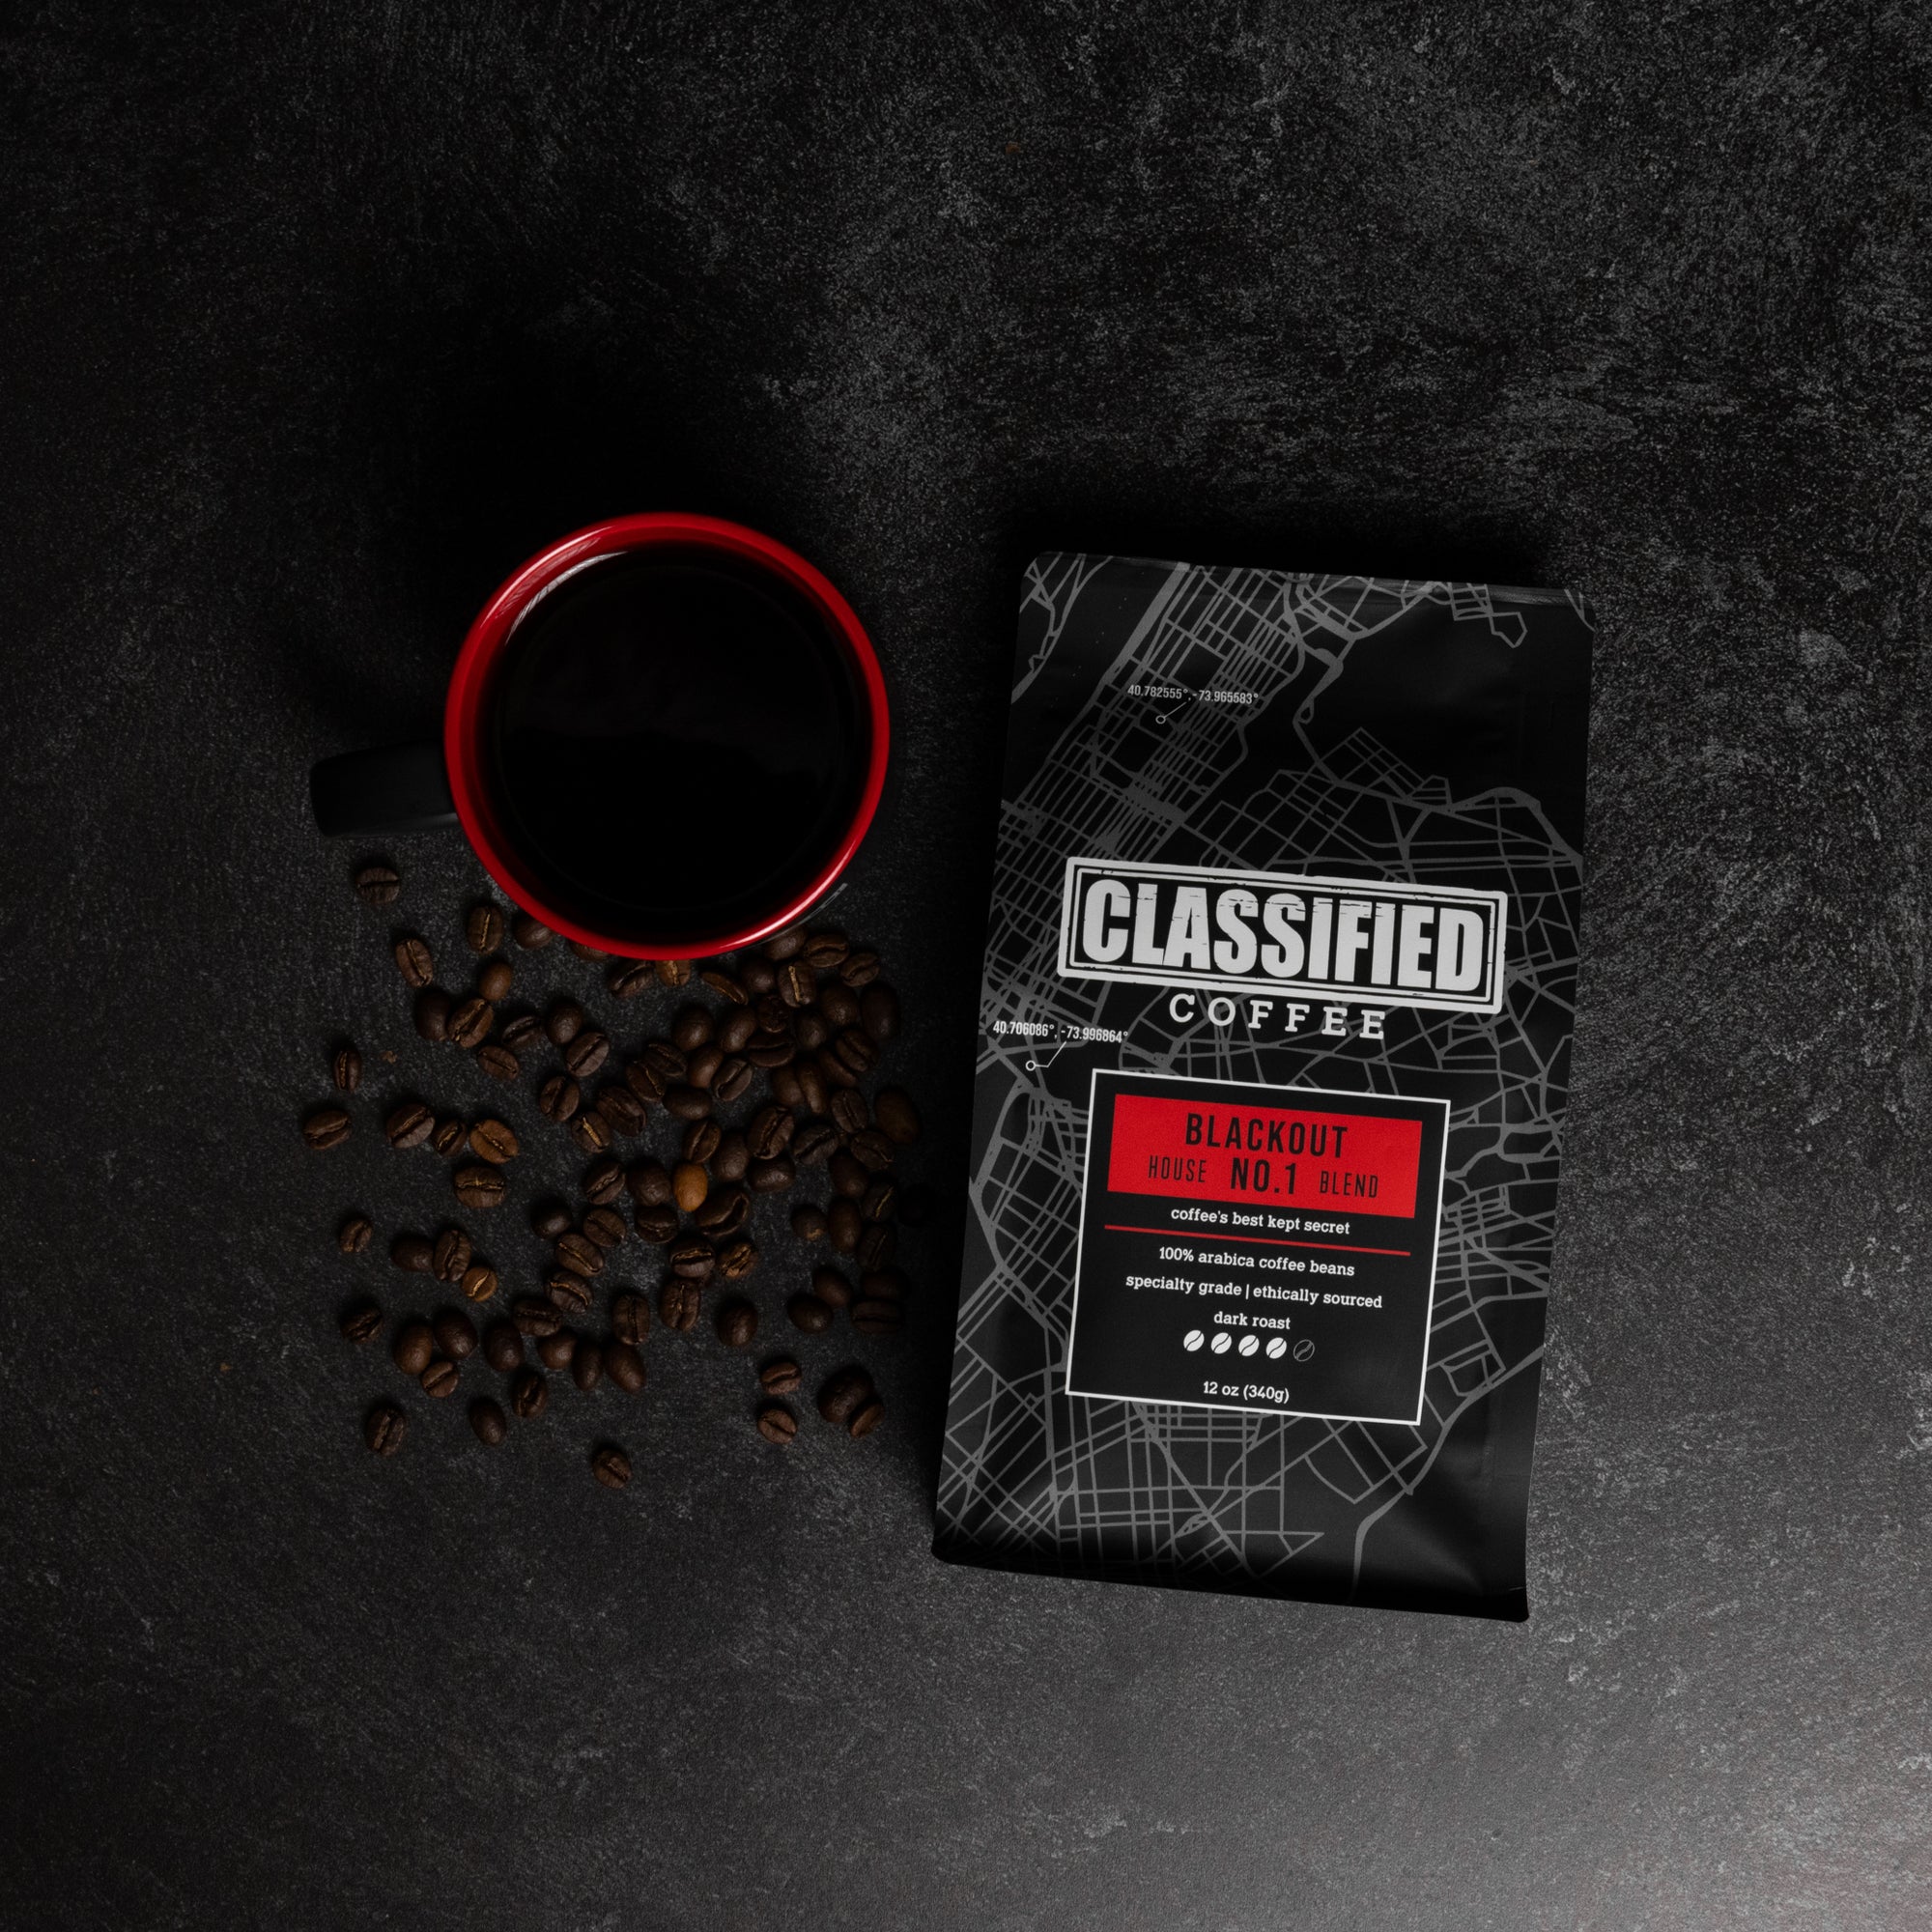 Classified Coffee Mug with coffee bag and beans